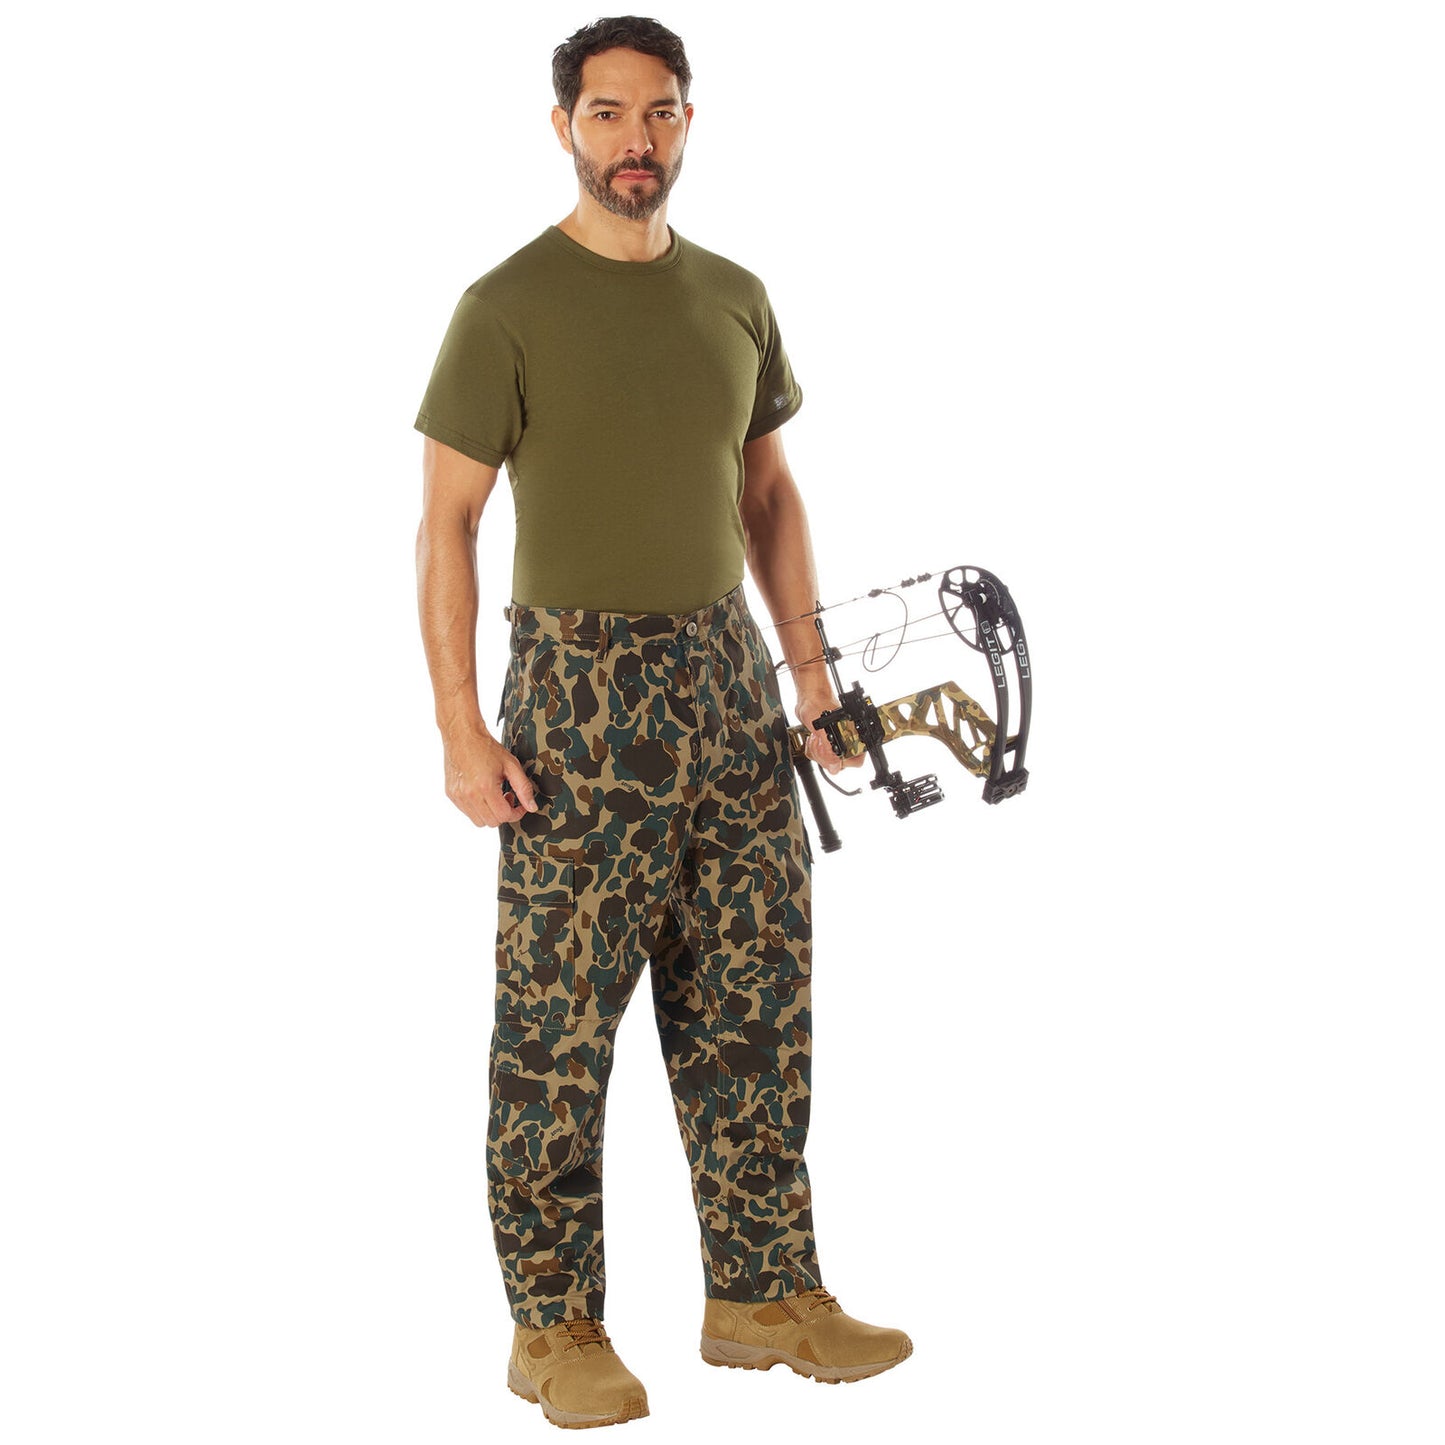 Rothco X Bear Archery Fred Bear Camo Tactical BDU Pants - Rugged Cargo Pants